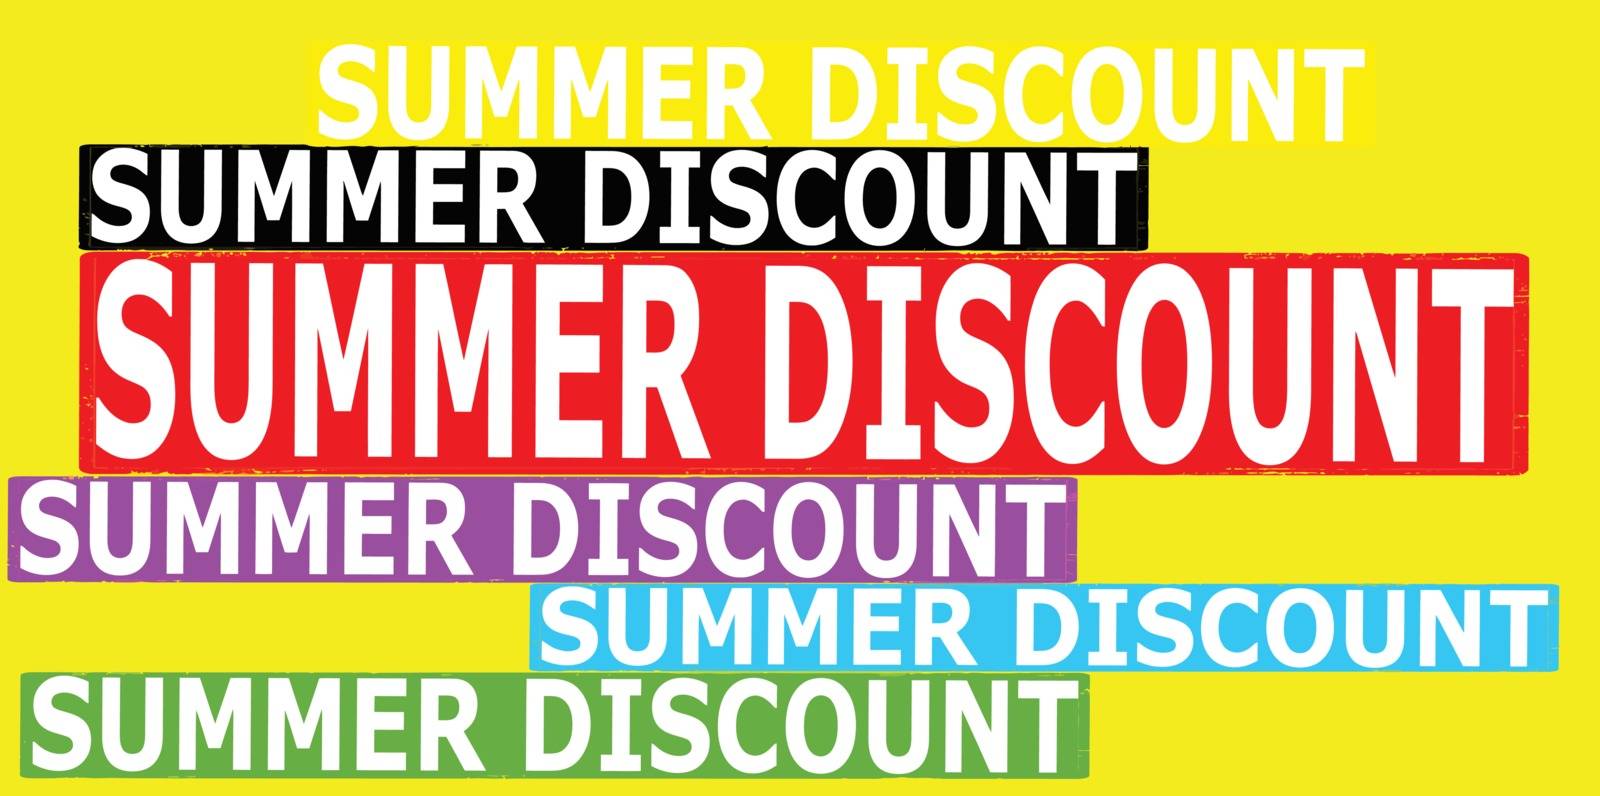 Summer discount by carmenbobo